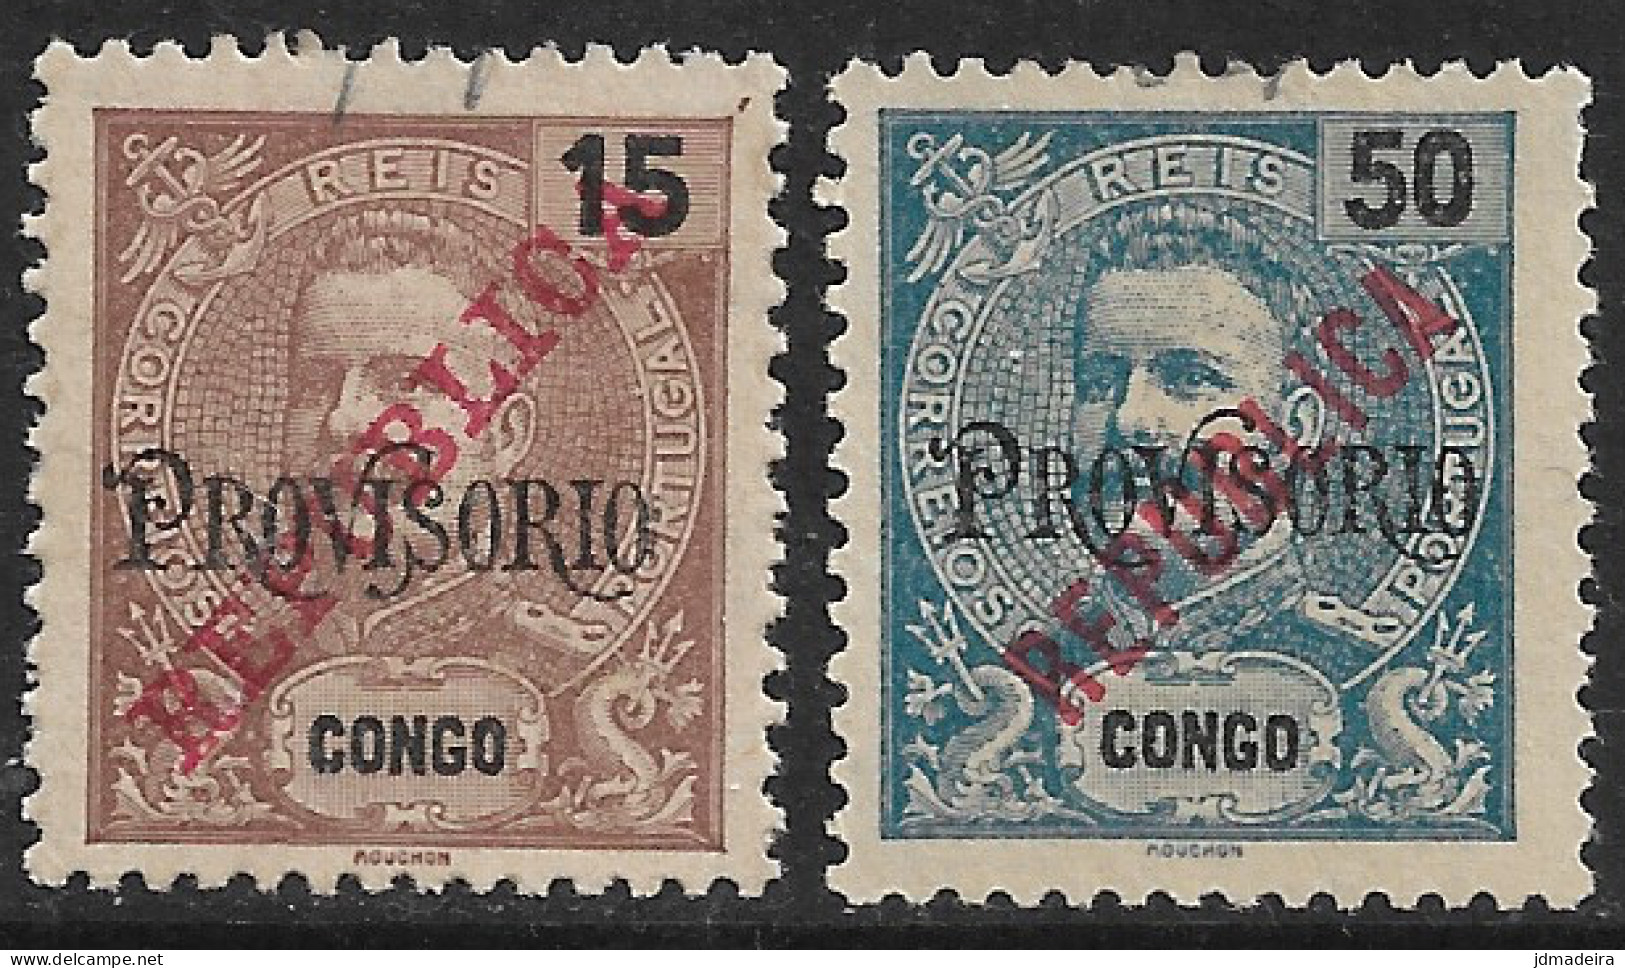 Portuguese Congo – 1915 King Carlos Overprinted PROVISORIO And REPUBLICA Used Set - Congo Portoghese